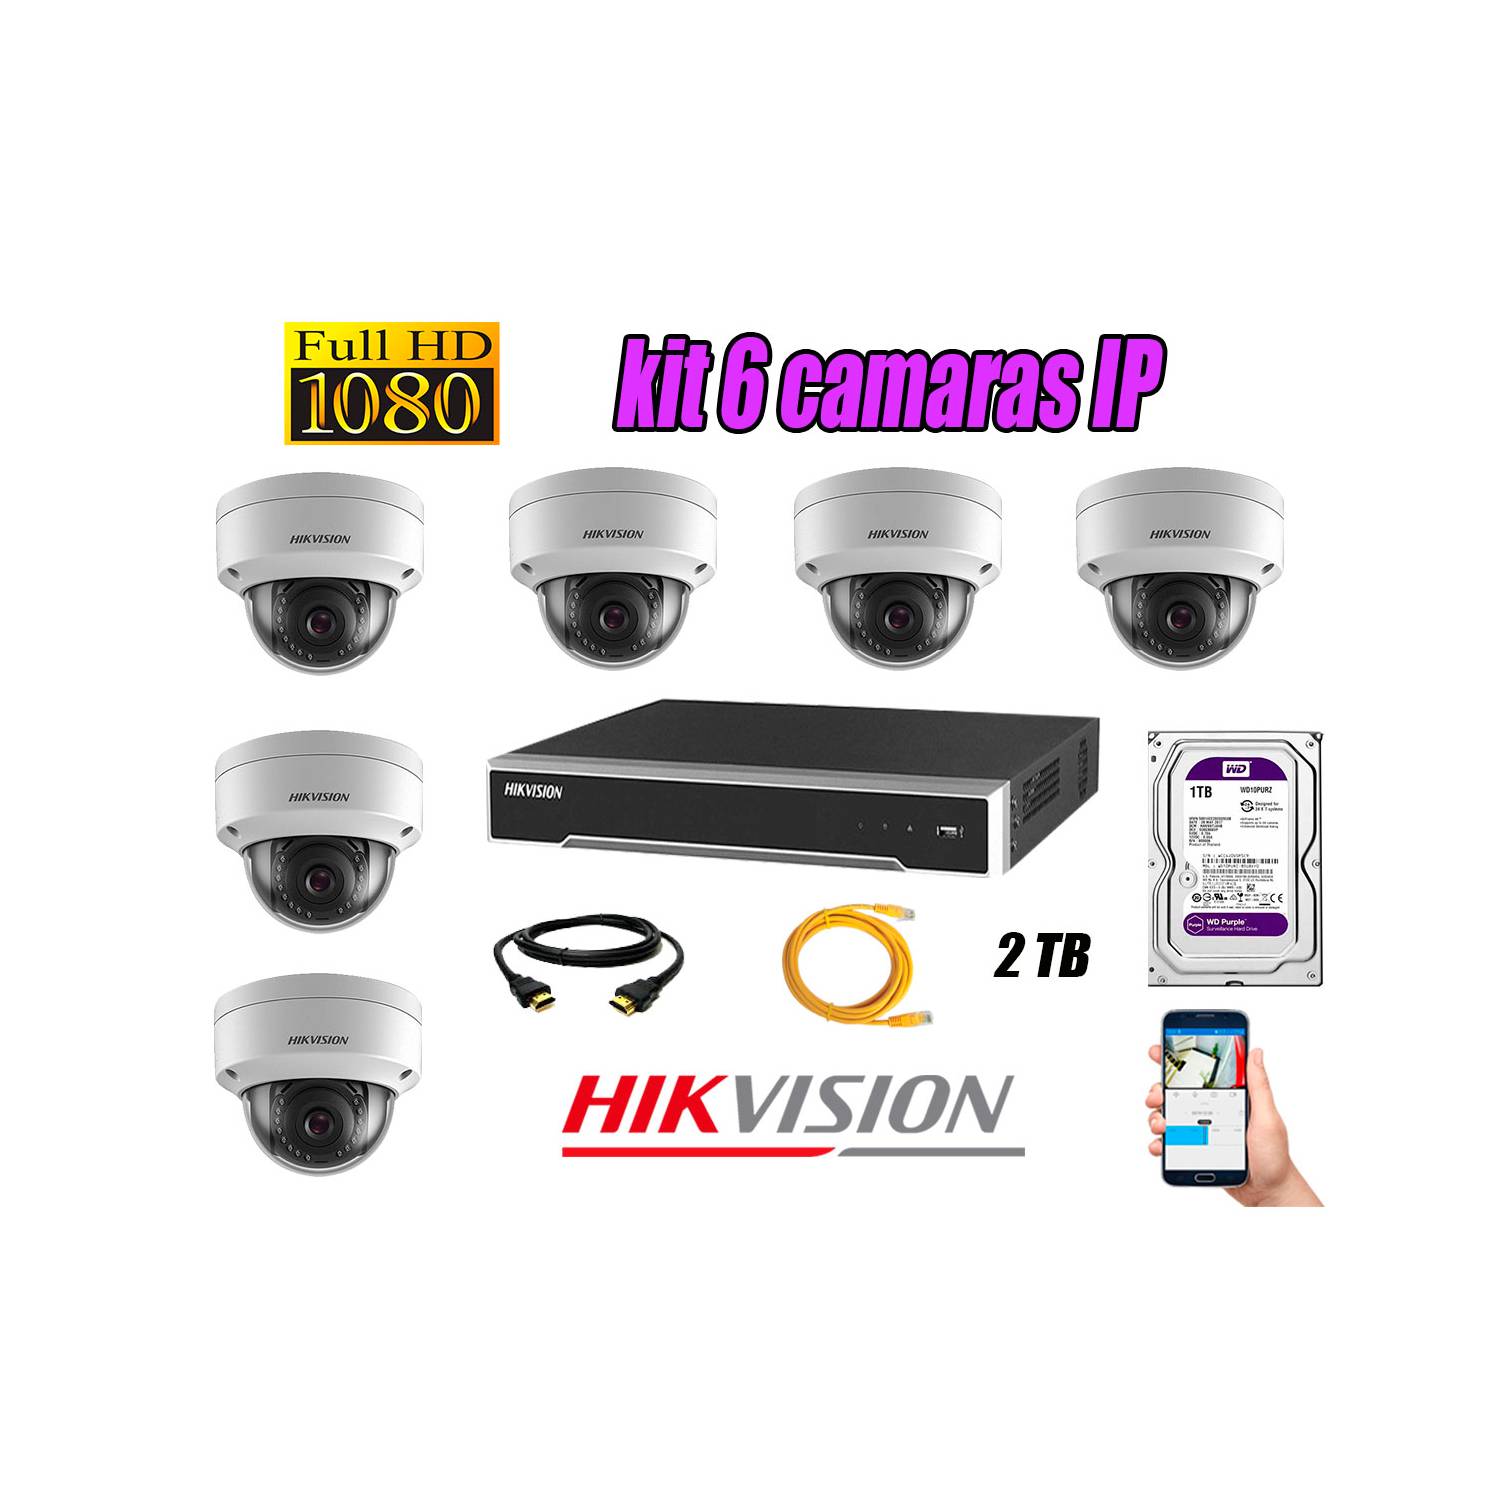 Camara de Seguridad Ip Poe Interior Full HD 1080P Kit 6 Disco 2TB WD  Purpura